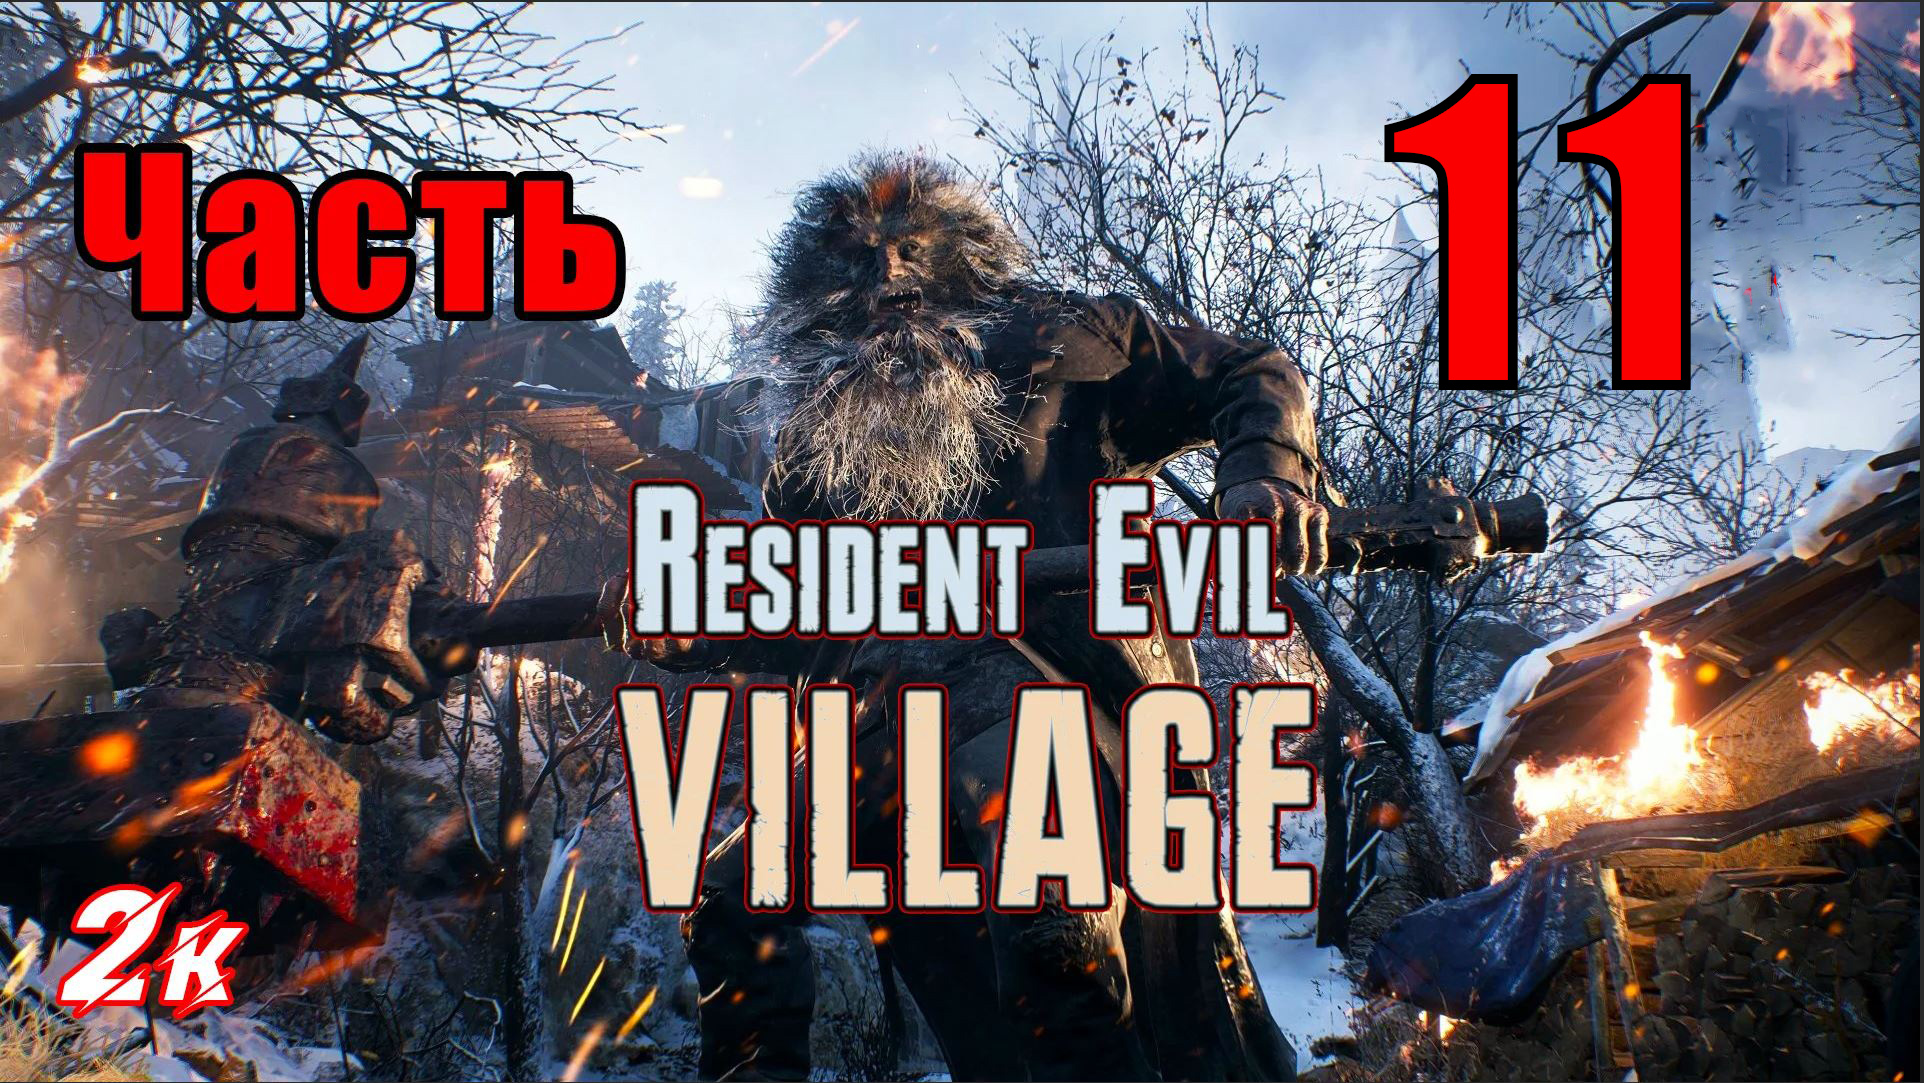 Resident Evil Village - на ПК ➤ Фабрика ➤ Прохождение # 11 ➤ 2K ➤